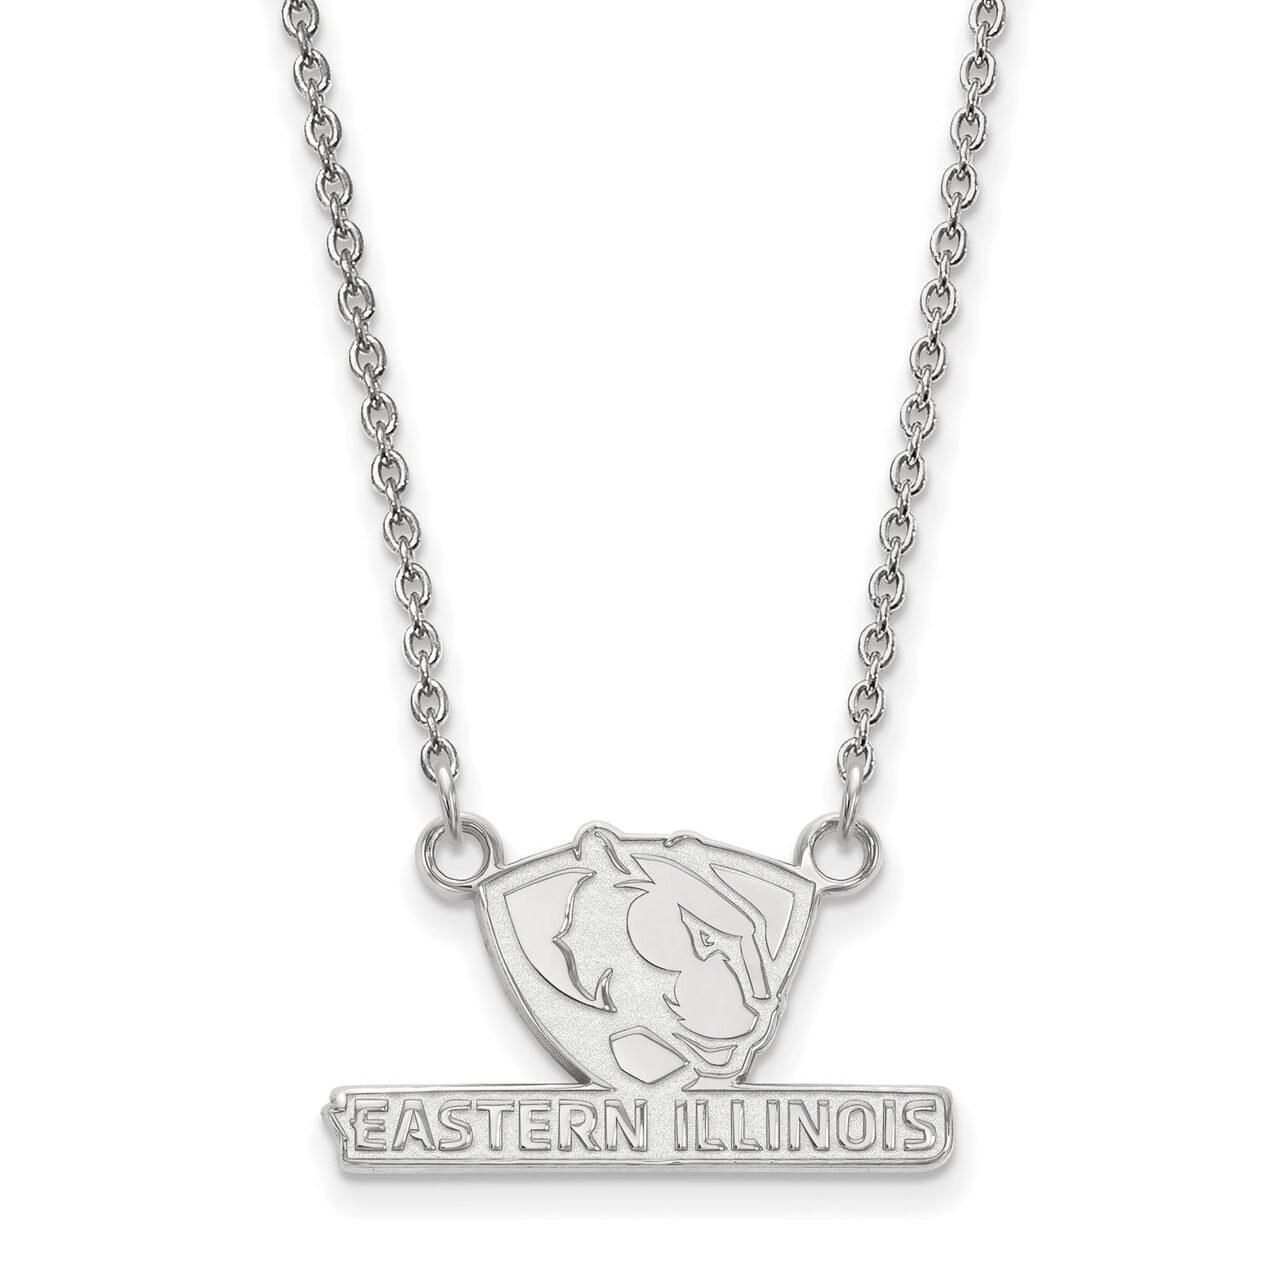 Eastern Illinois University Small Pendant with Chain Necklace 14k White Gold 4W007EIU-18